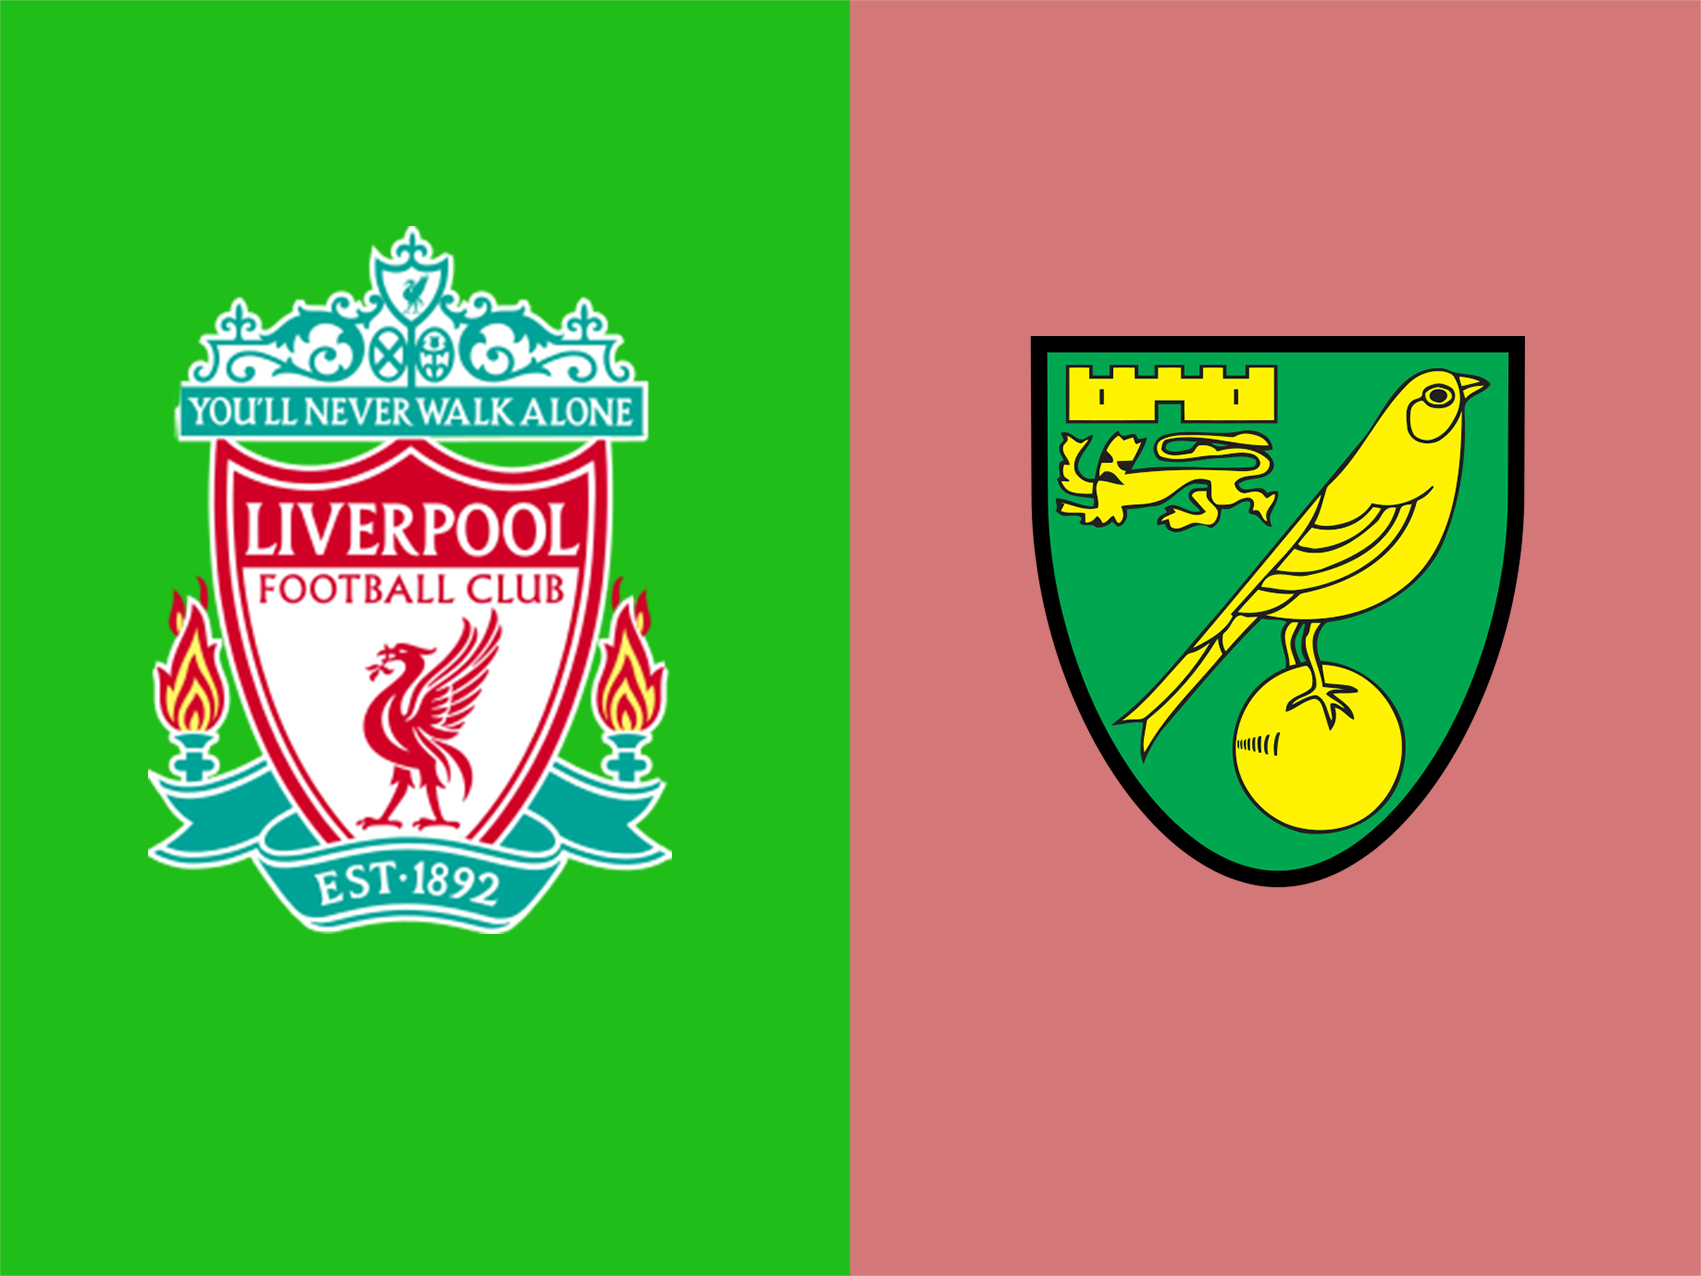 soi-keo-ca-cuoc-bong-da-ngay-2-8-Liverpool-vs-Norwich City-tim-kiem-chien-thang-b9 1